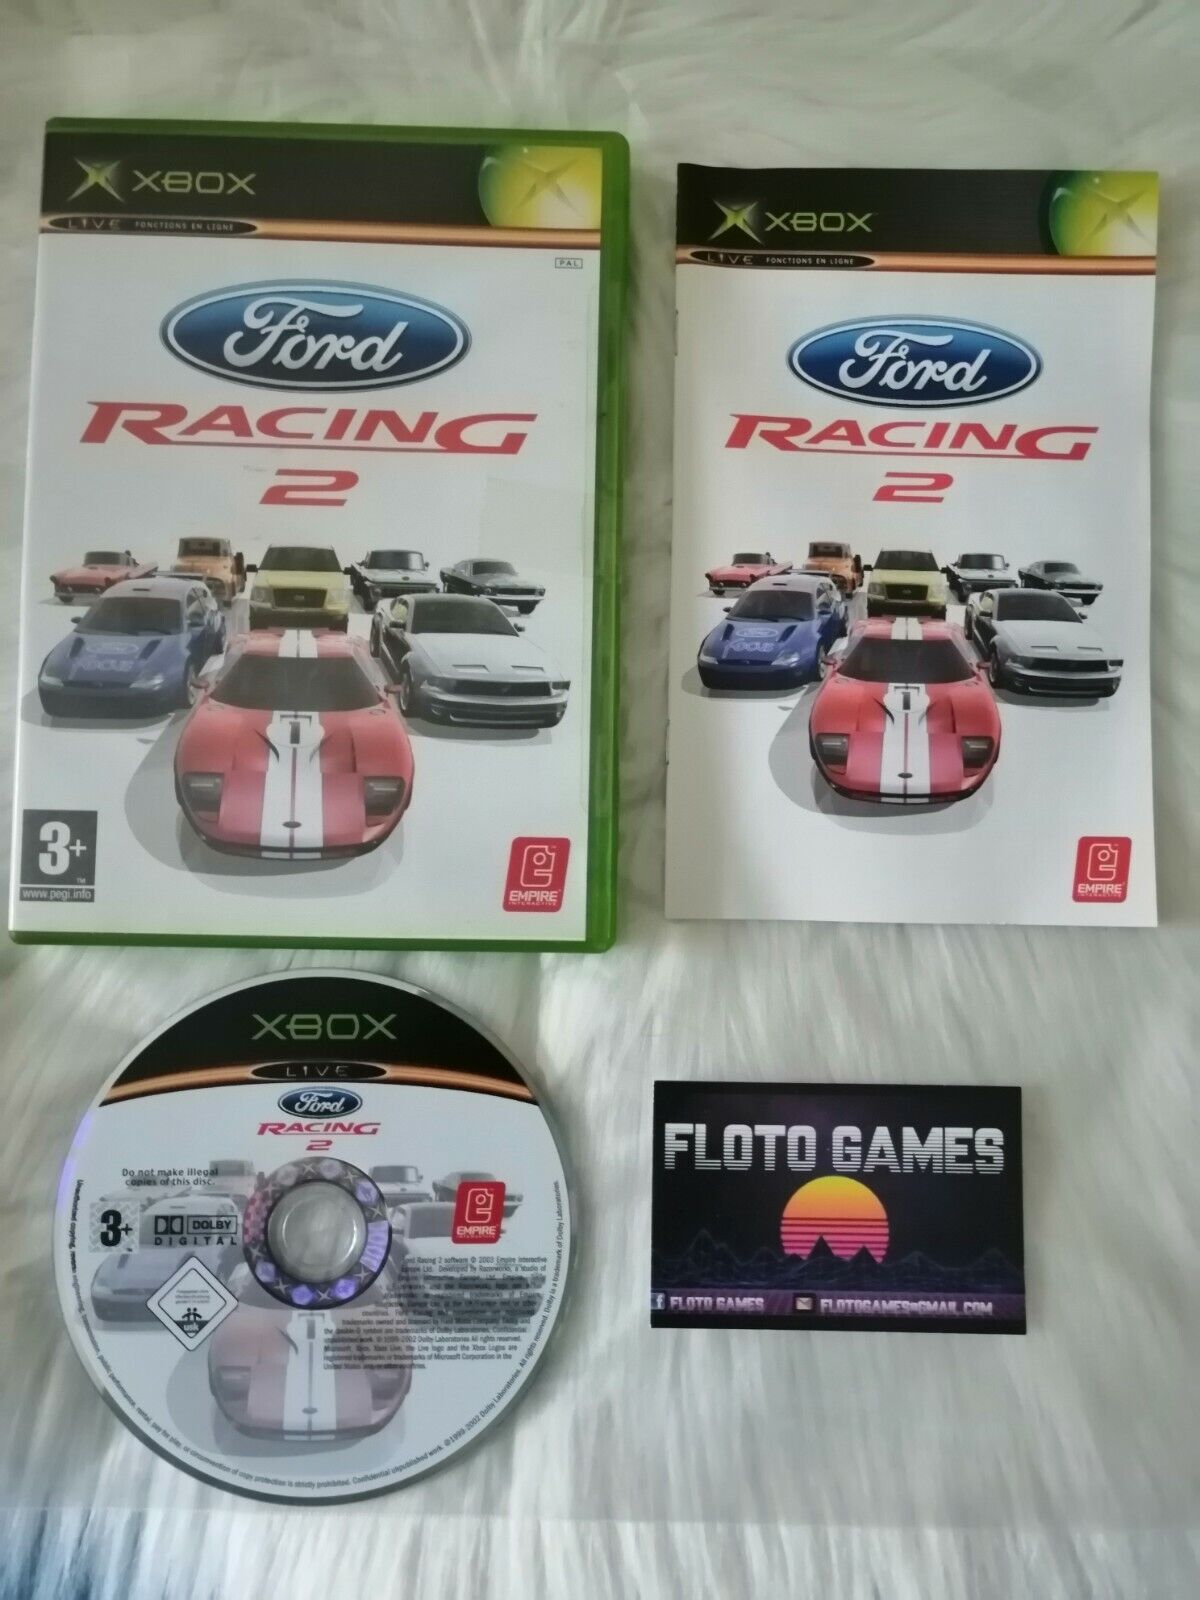 Jeu Ford Racing 2 pour X-Box XBOX PAL Complet CIB - Floto Games